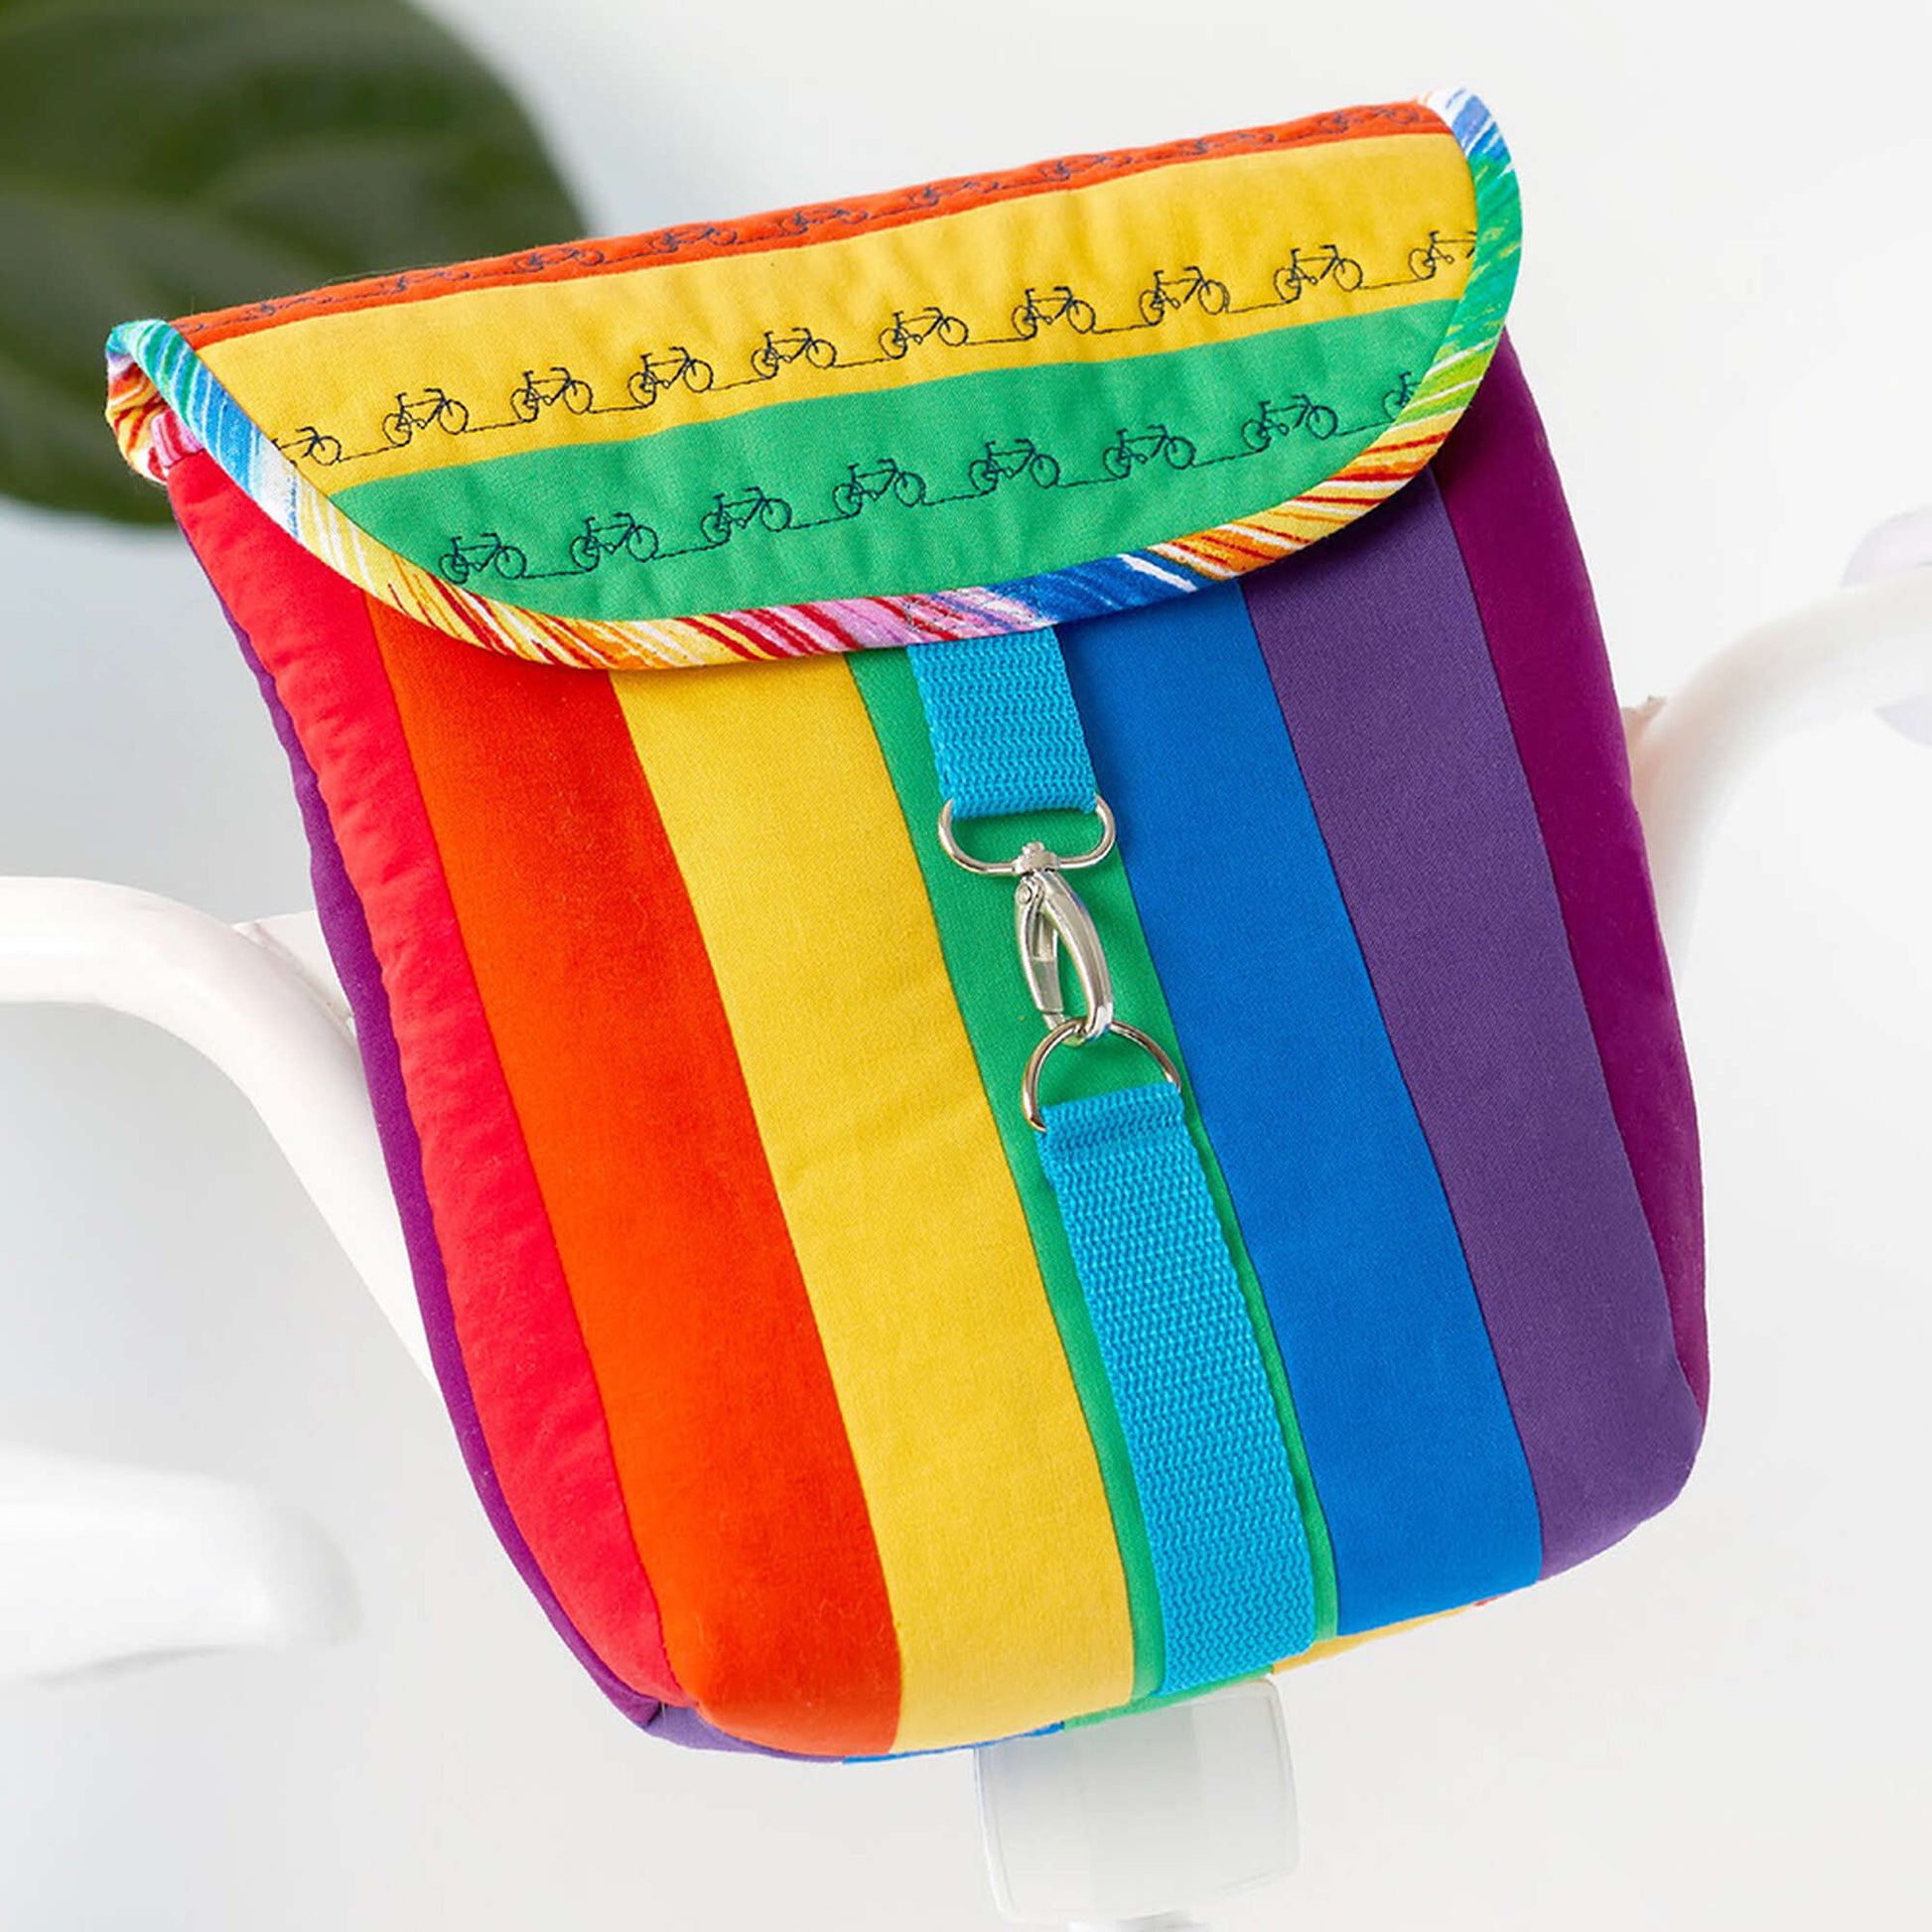 Free Coats & Clark Sewing Rainbow Bike Bag Pattern